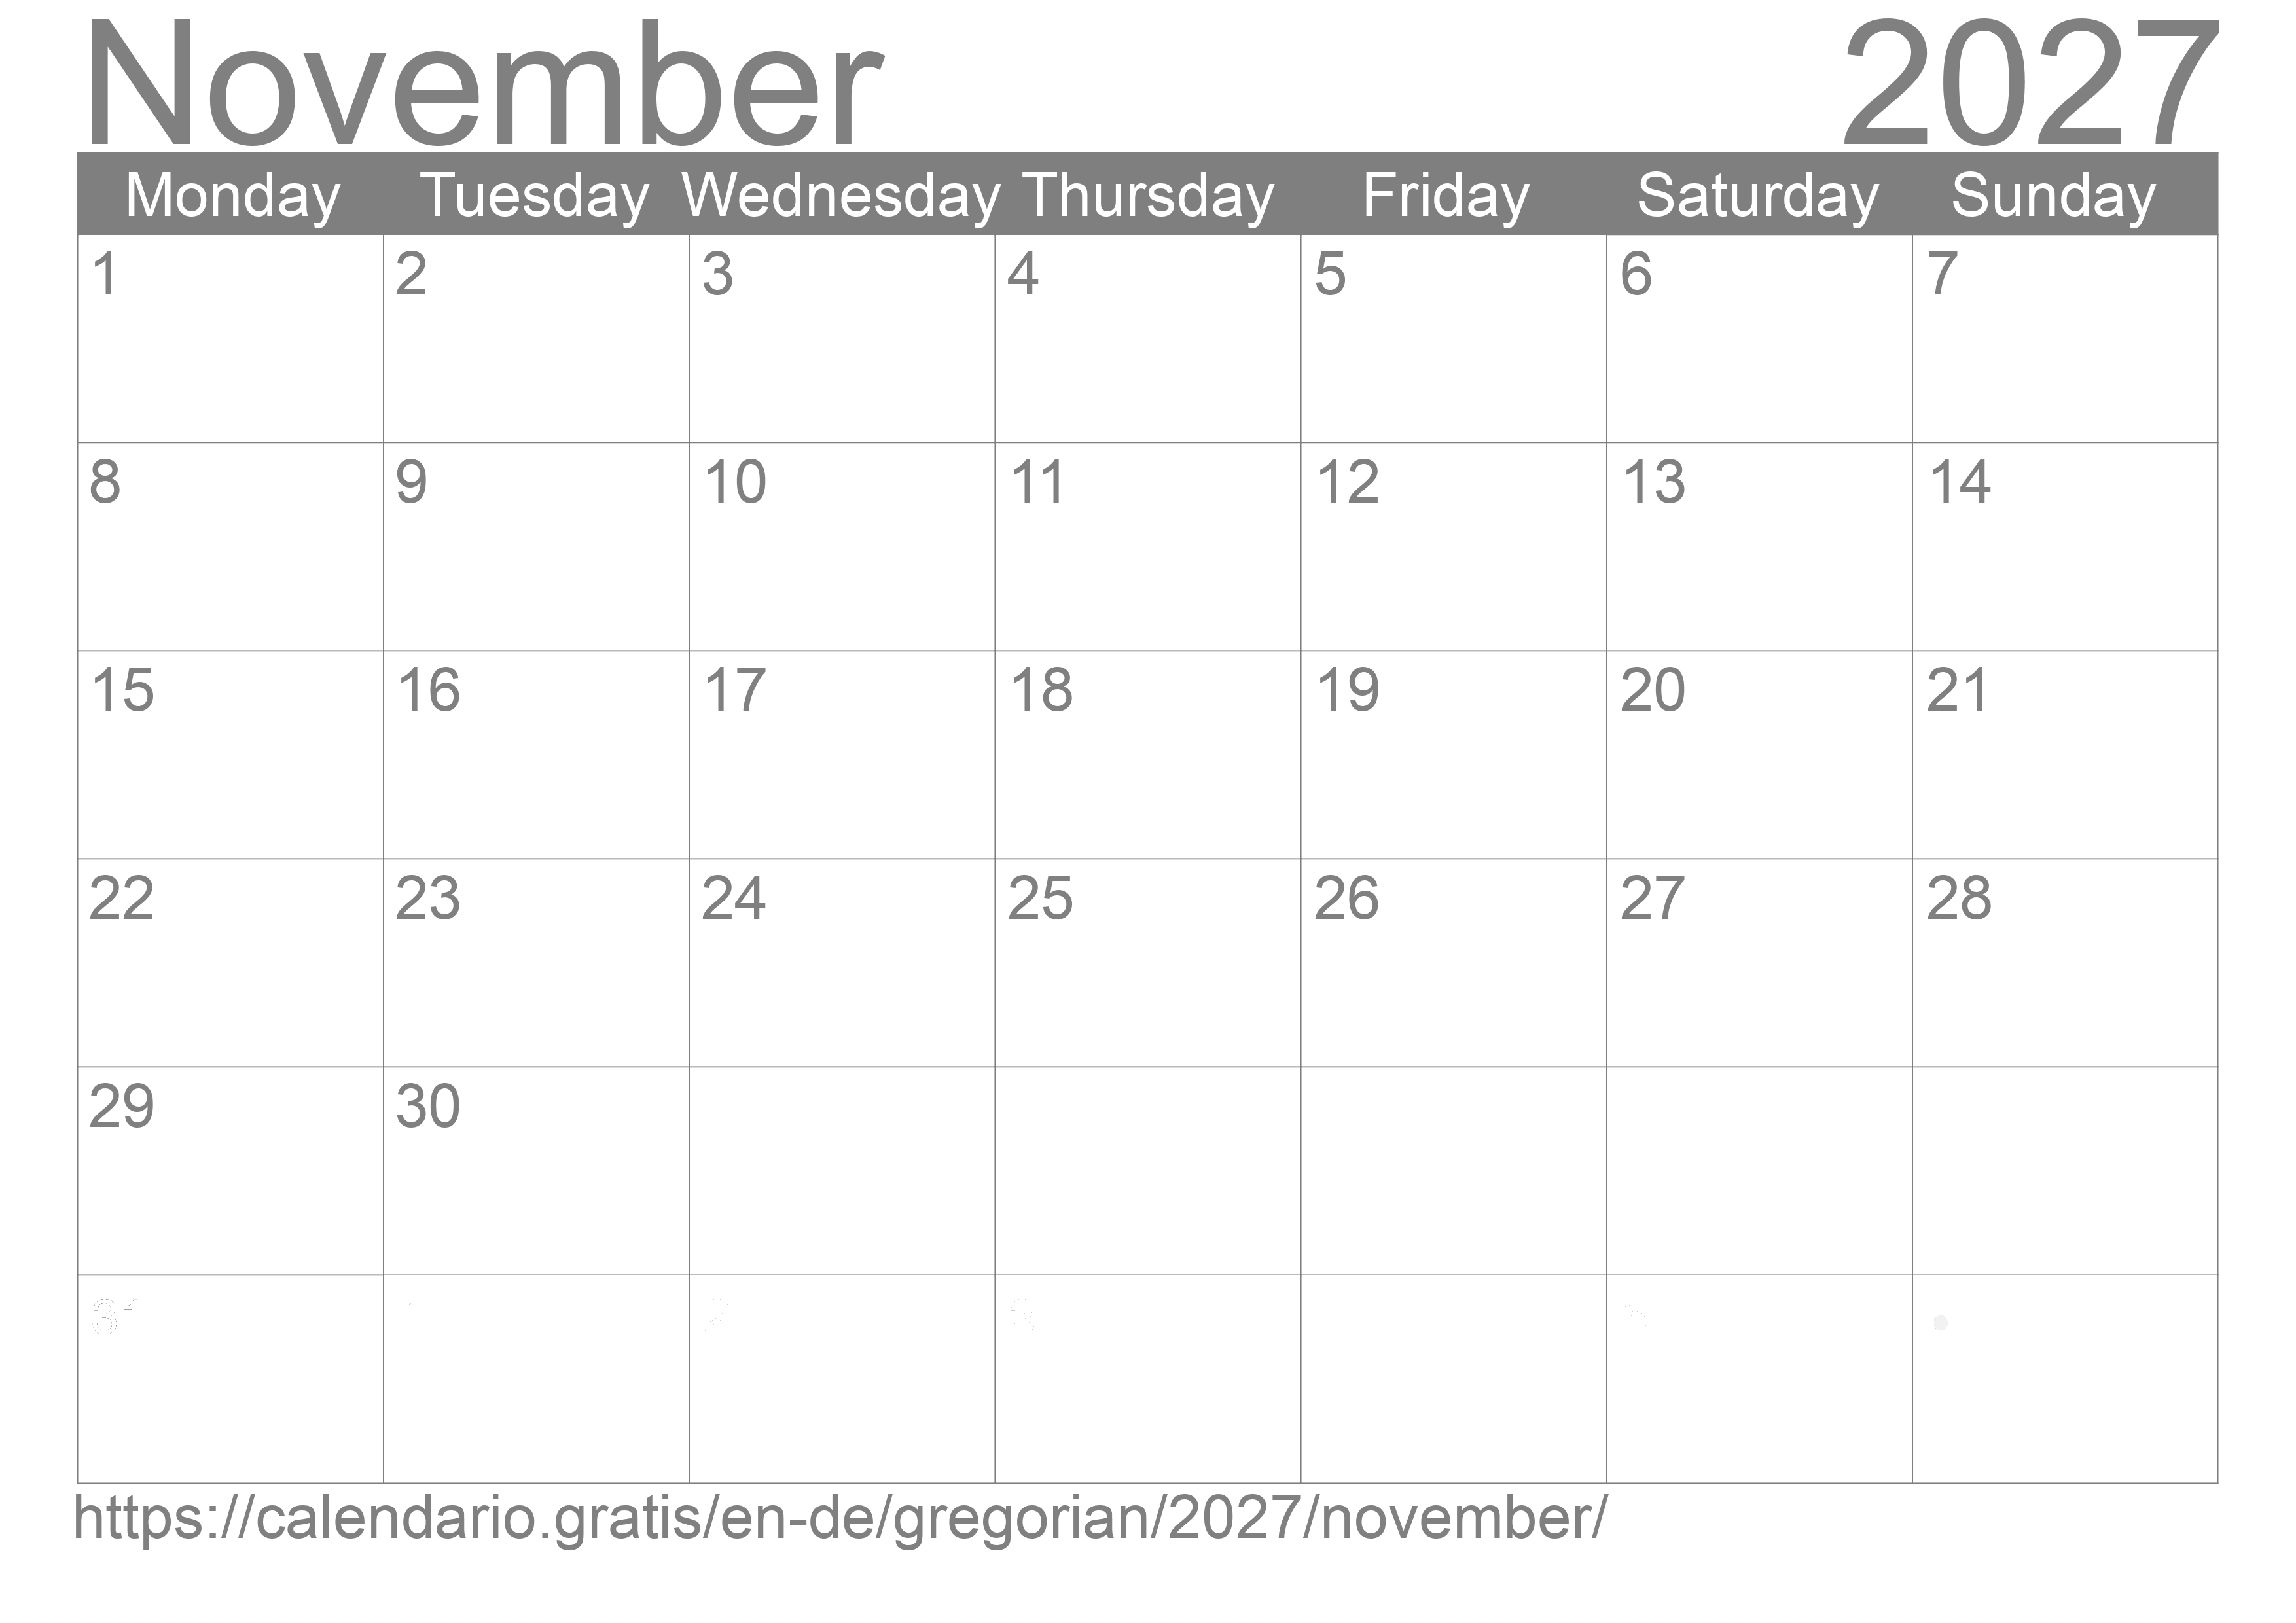 Calendar November 2027 to print